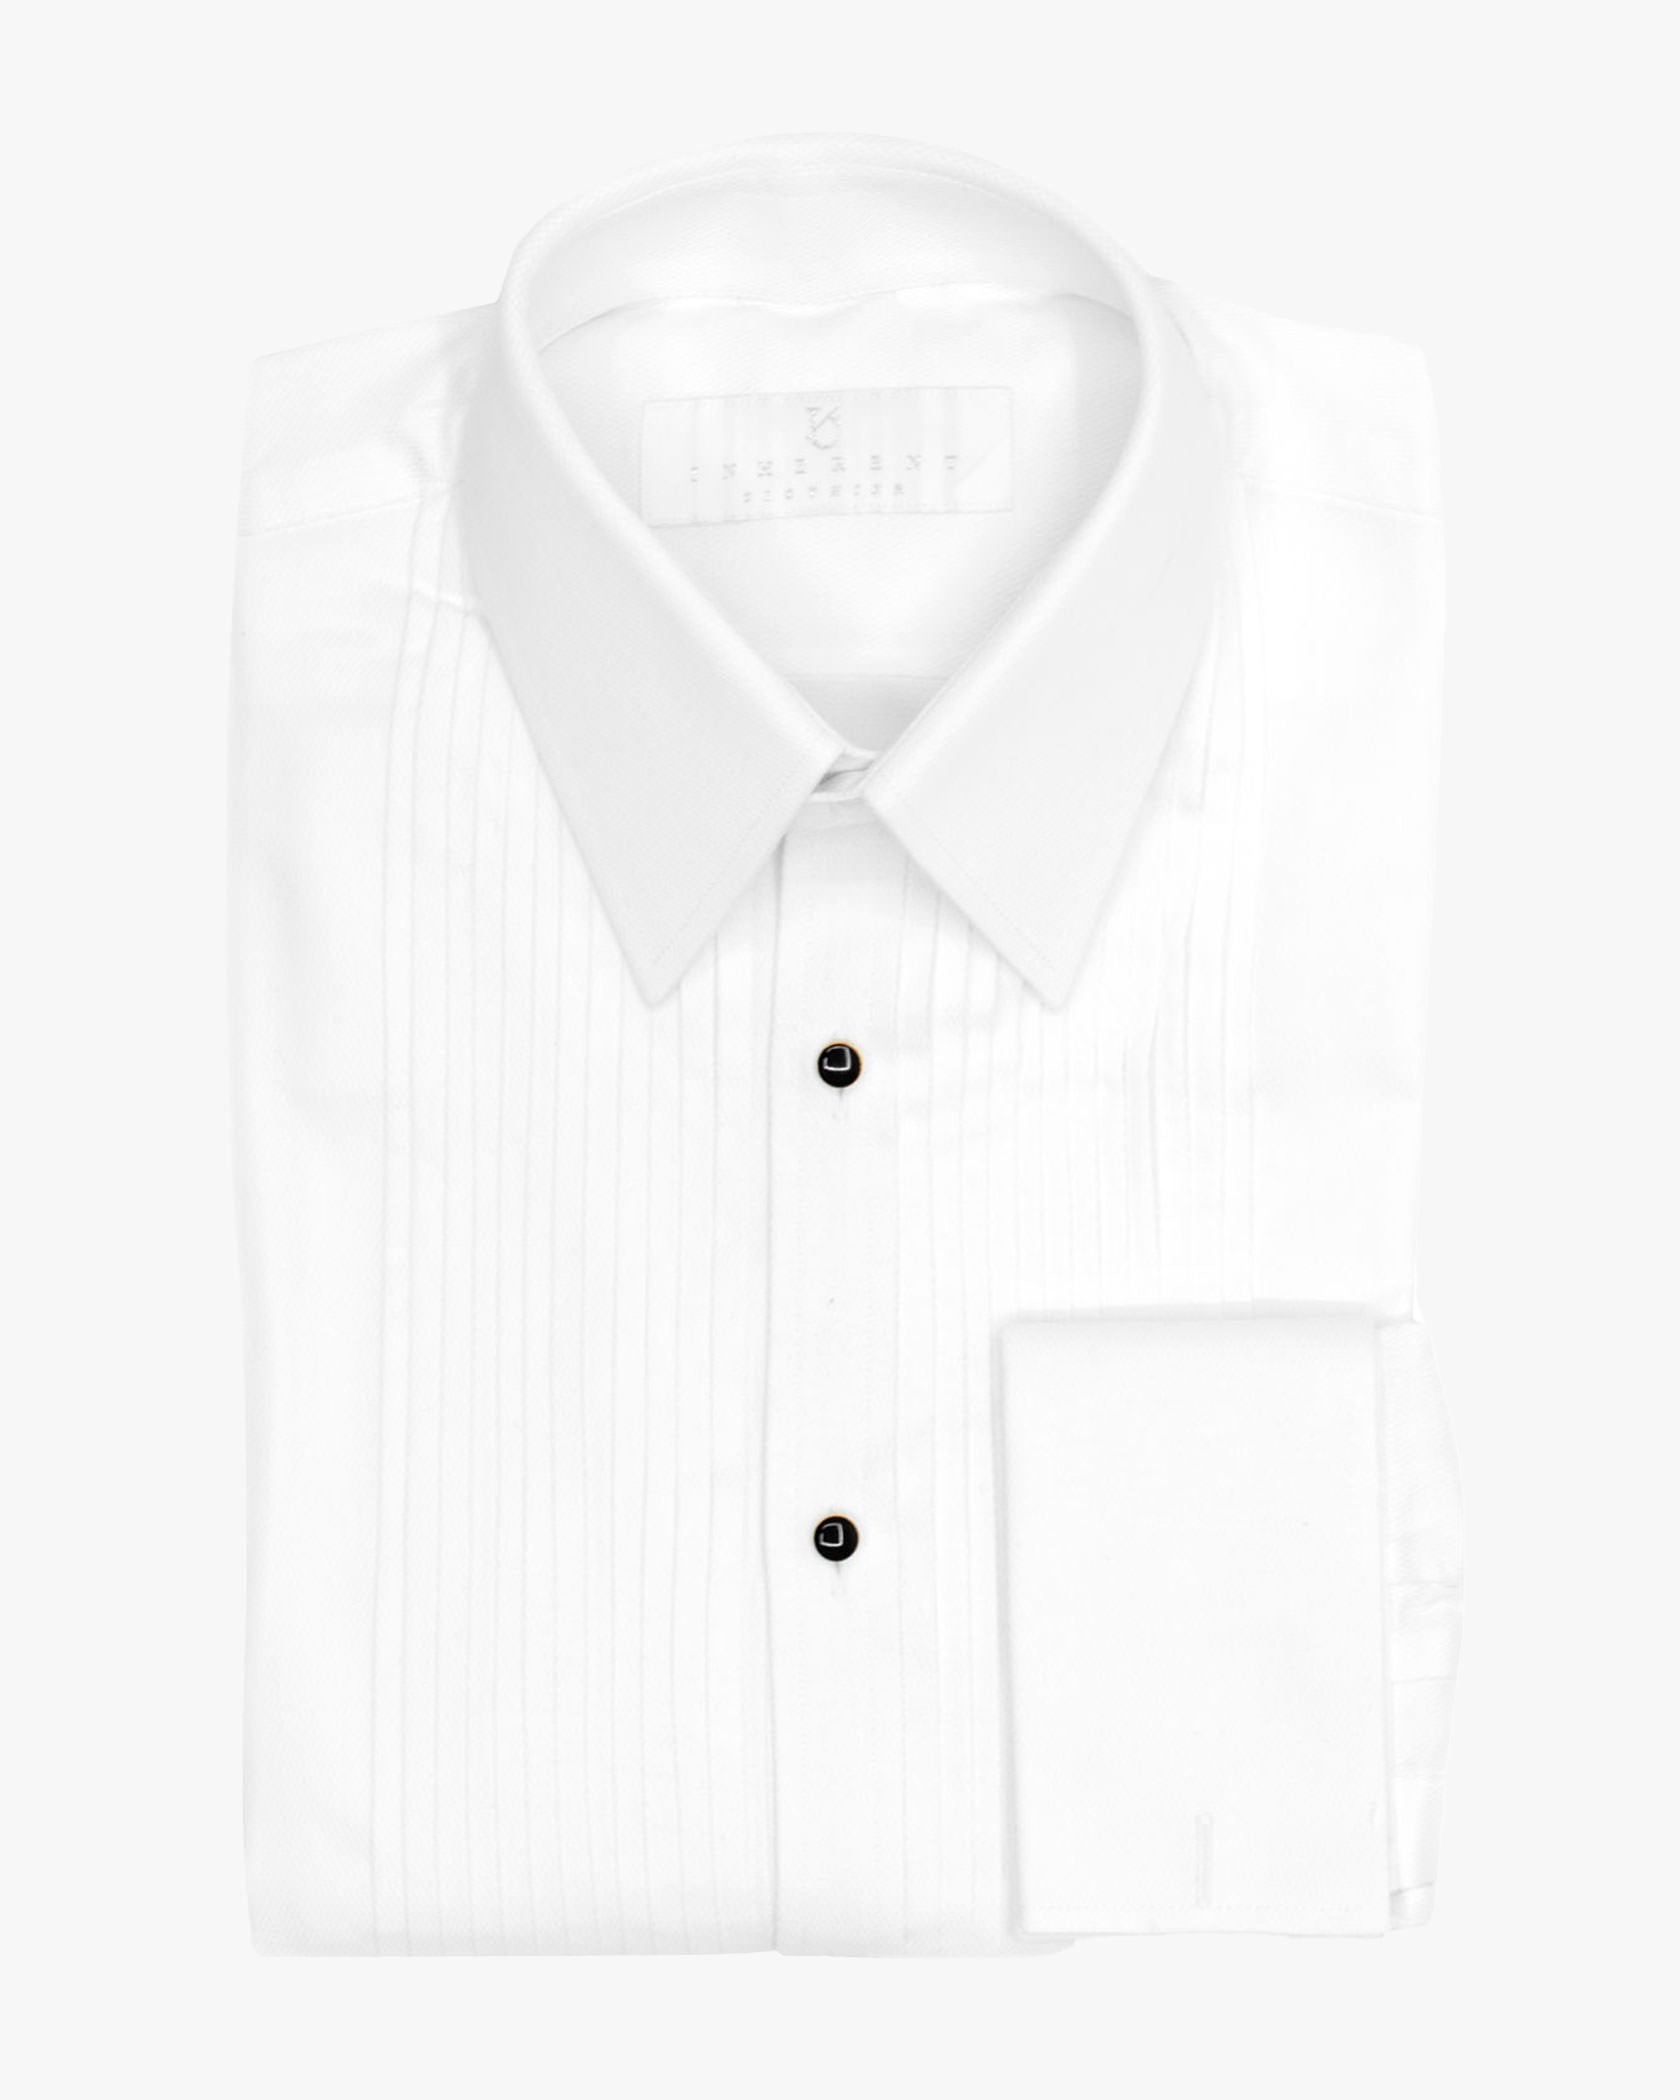 Bryant/Draper - The Fairbanks Tuxedo Shirt